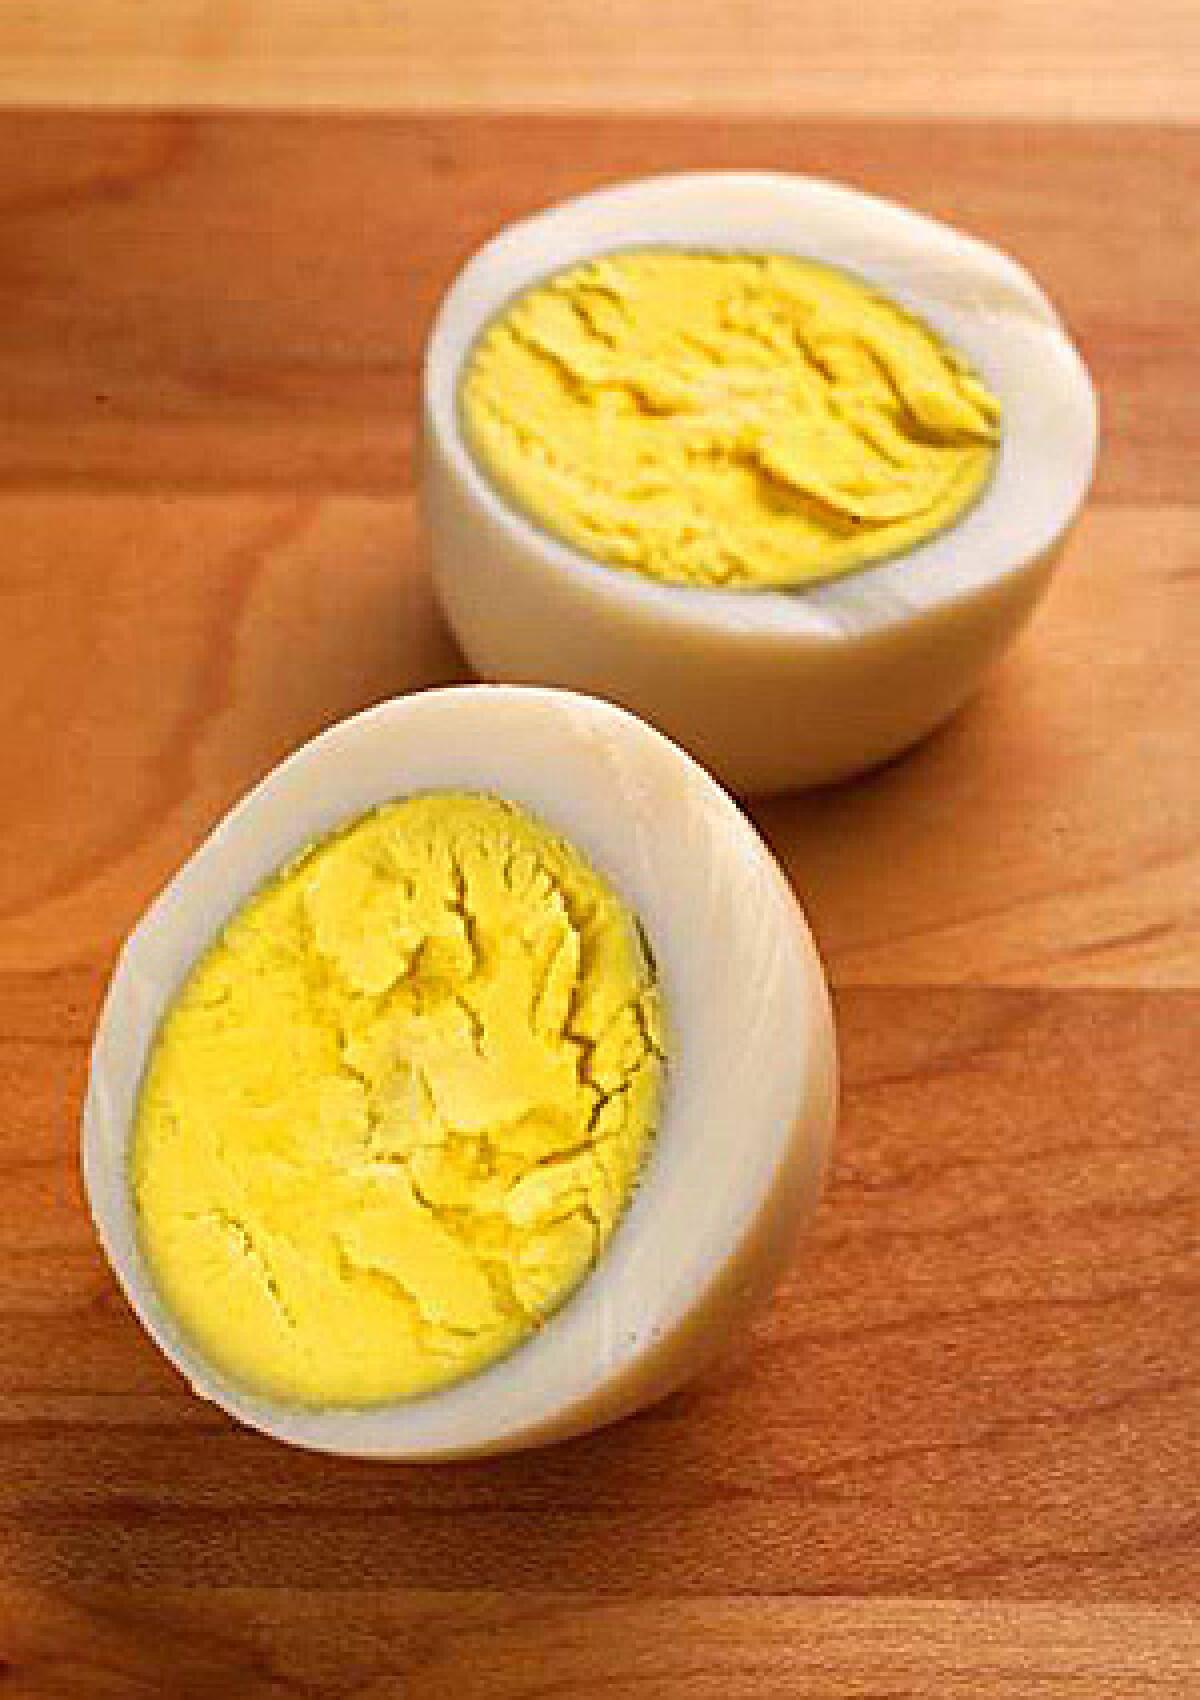 Making a hard boiled egg is easy.